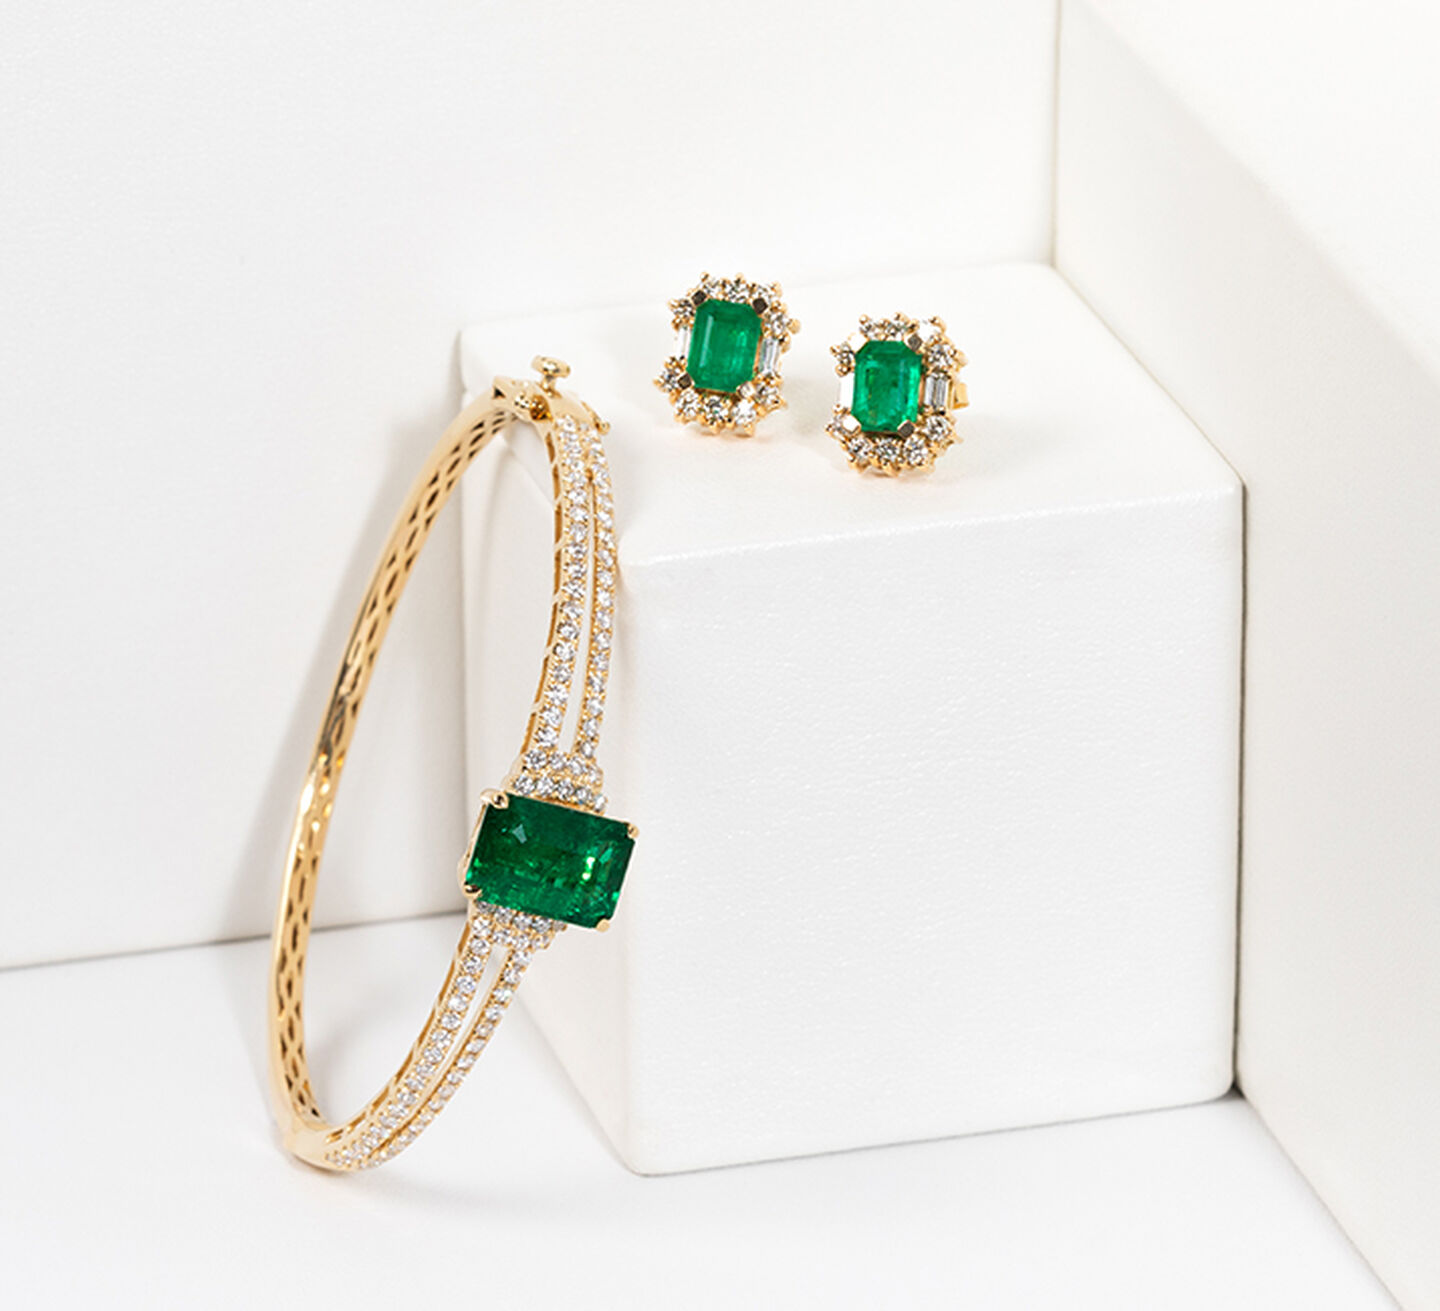 Maison Birks Salon gold and diamond bracelet with an emerald stone beside matching earrings